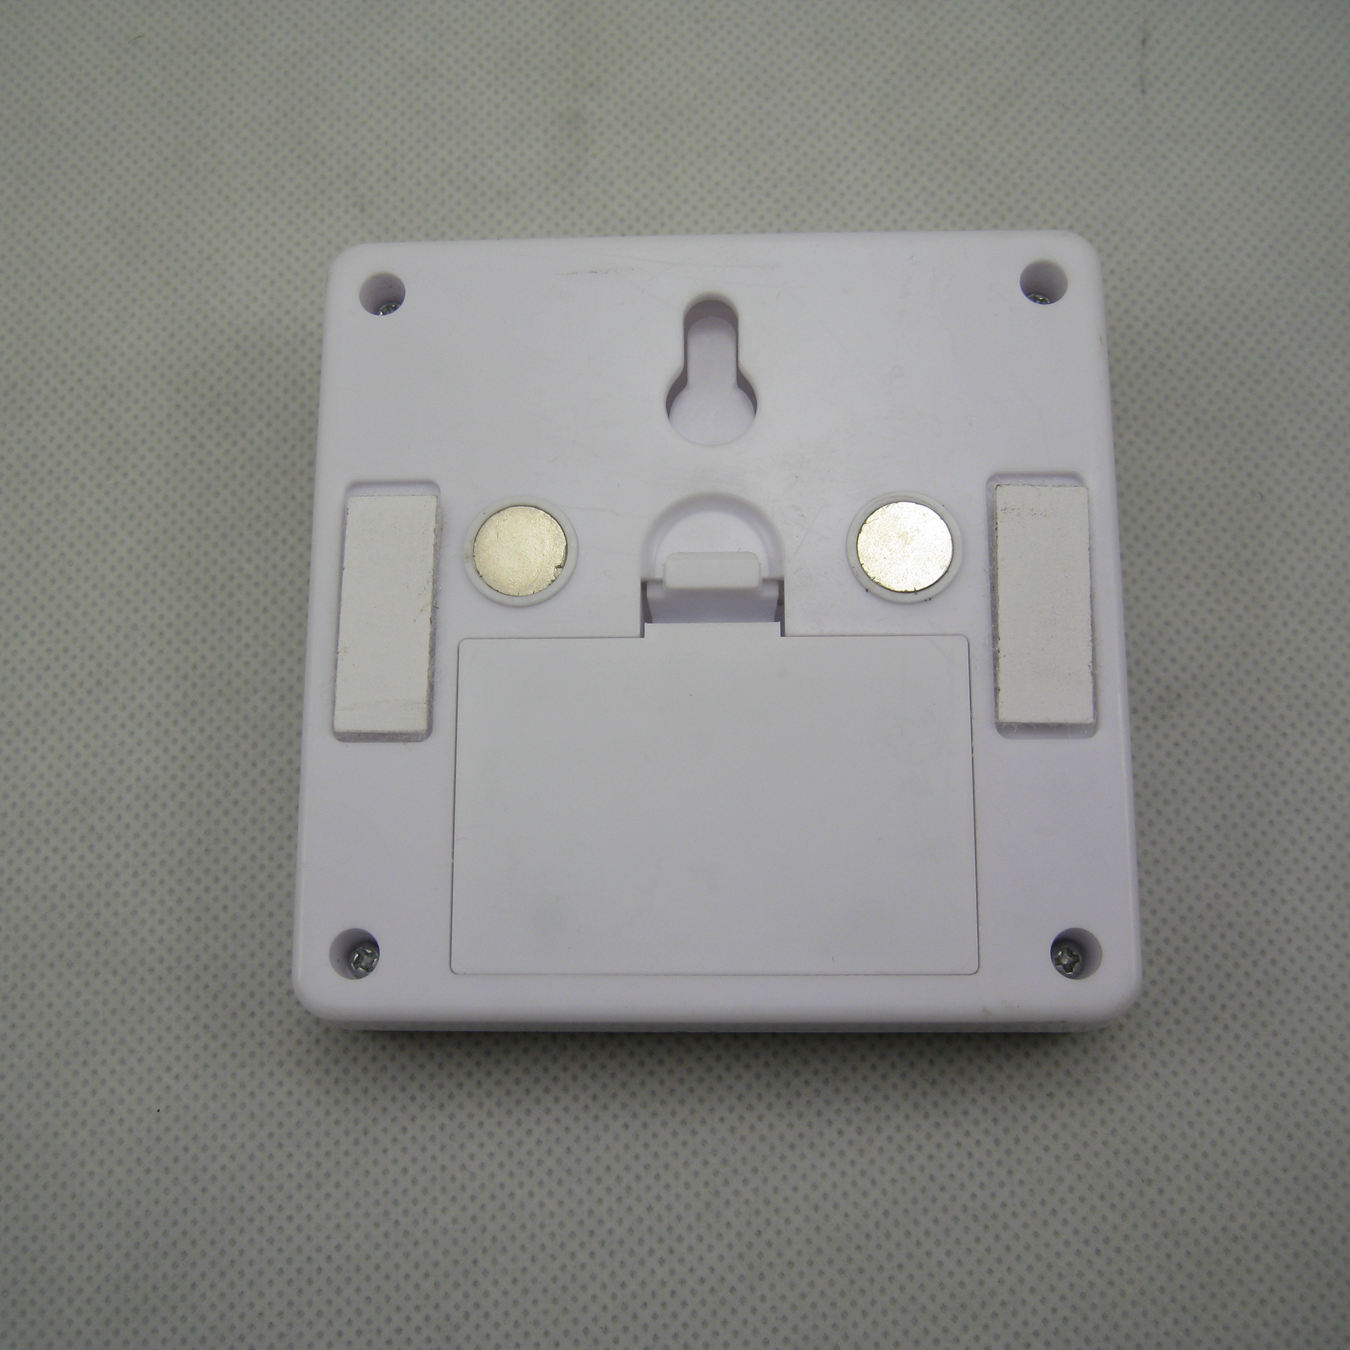 Battery operated wall mounted cordless COB LED switch night light 